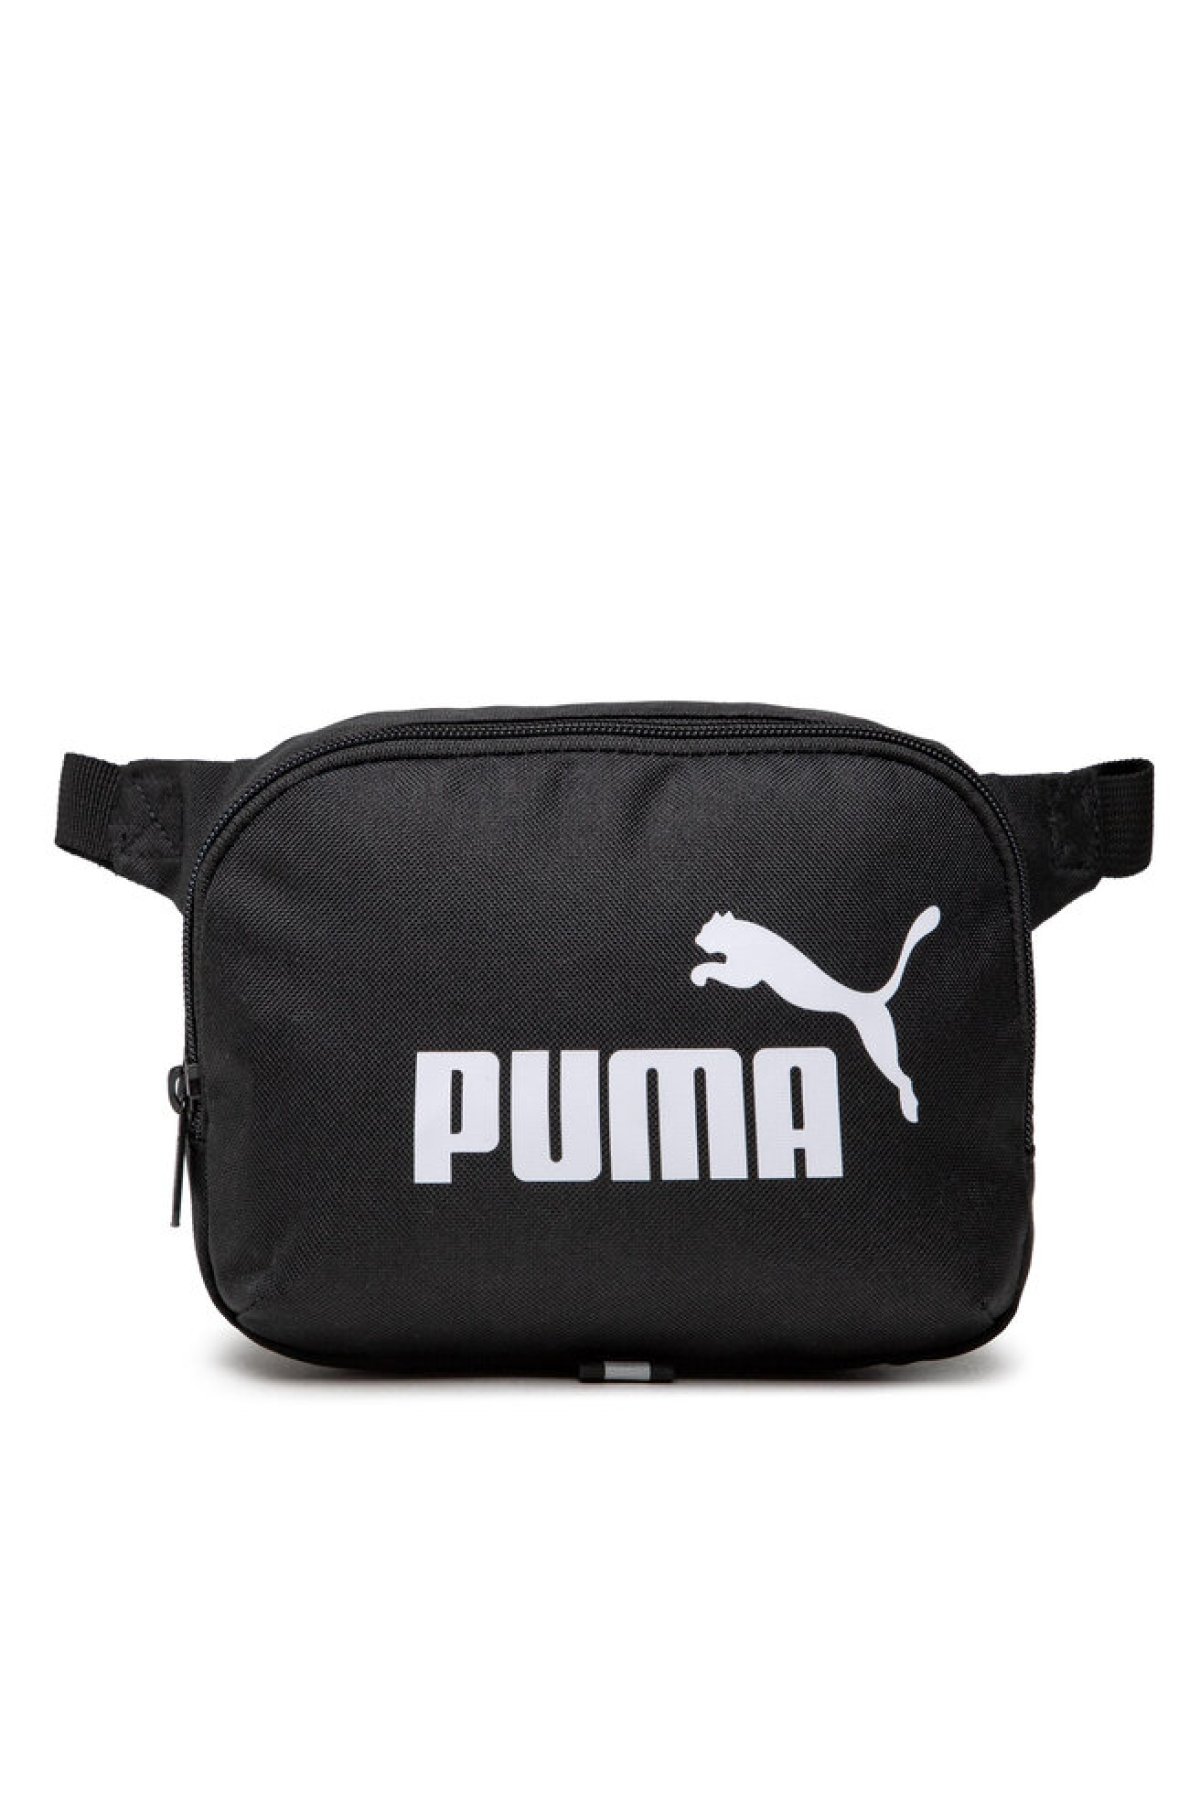 Puma 076908-01